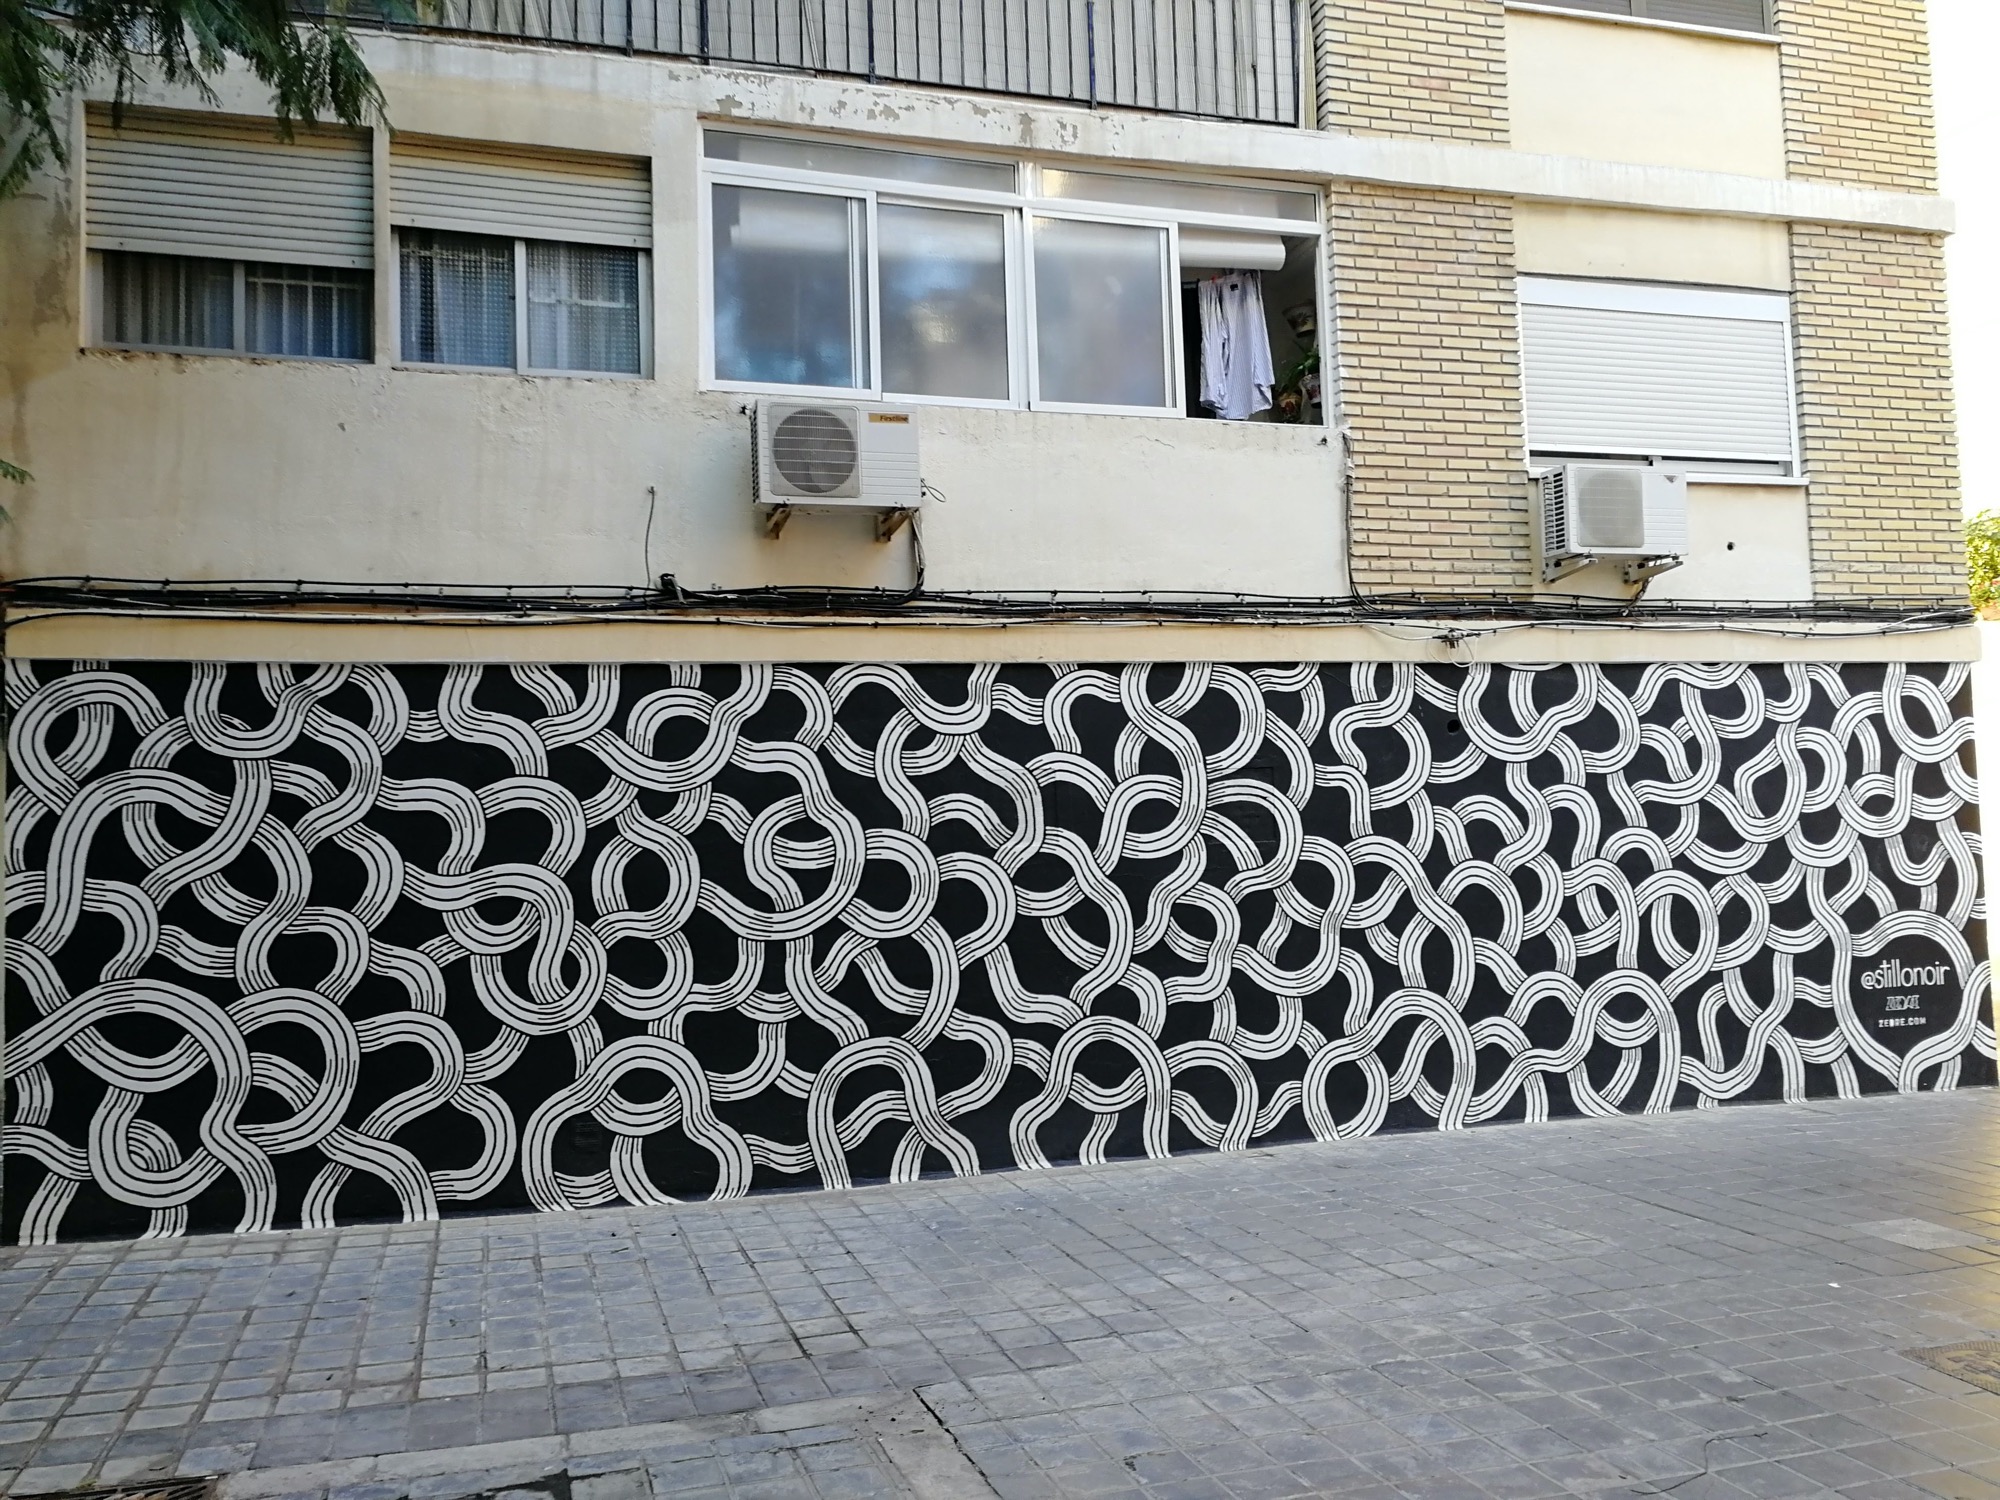 Graffiti 3755  by the artist Stillo noir captured by Rabot in València Spain